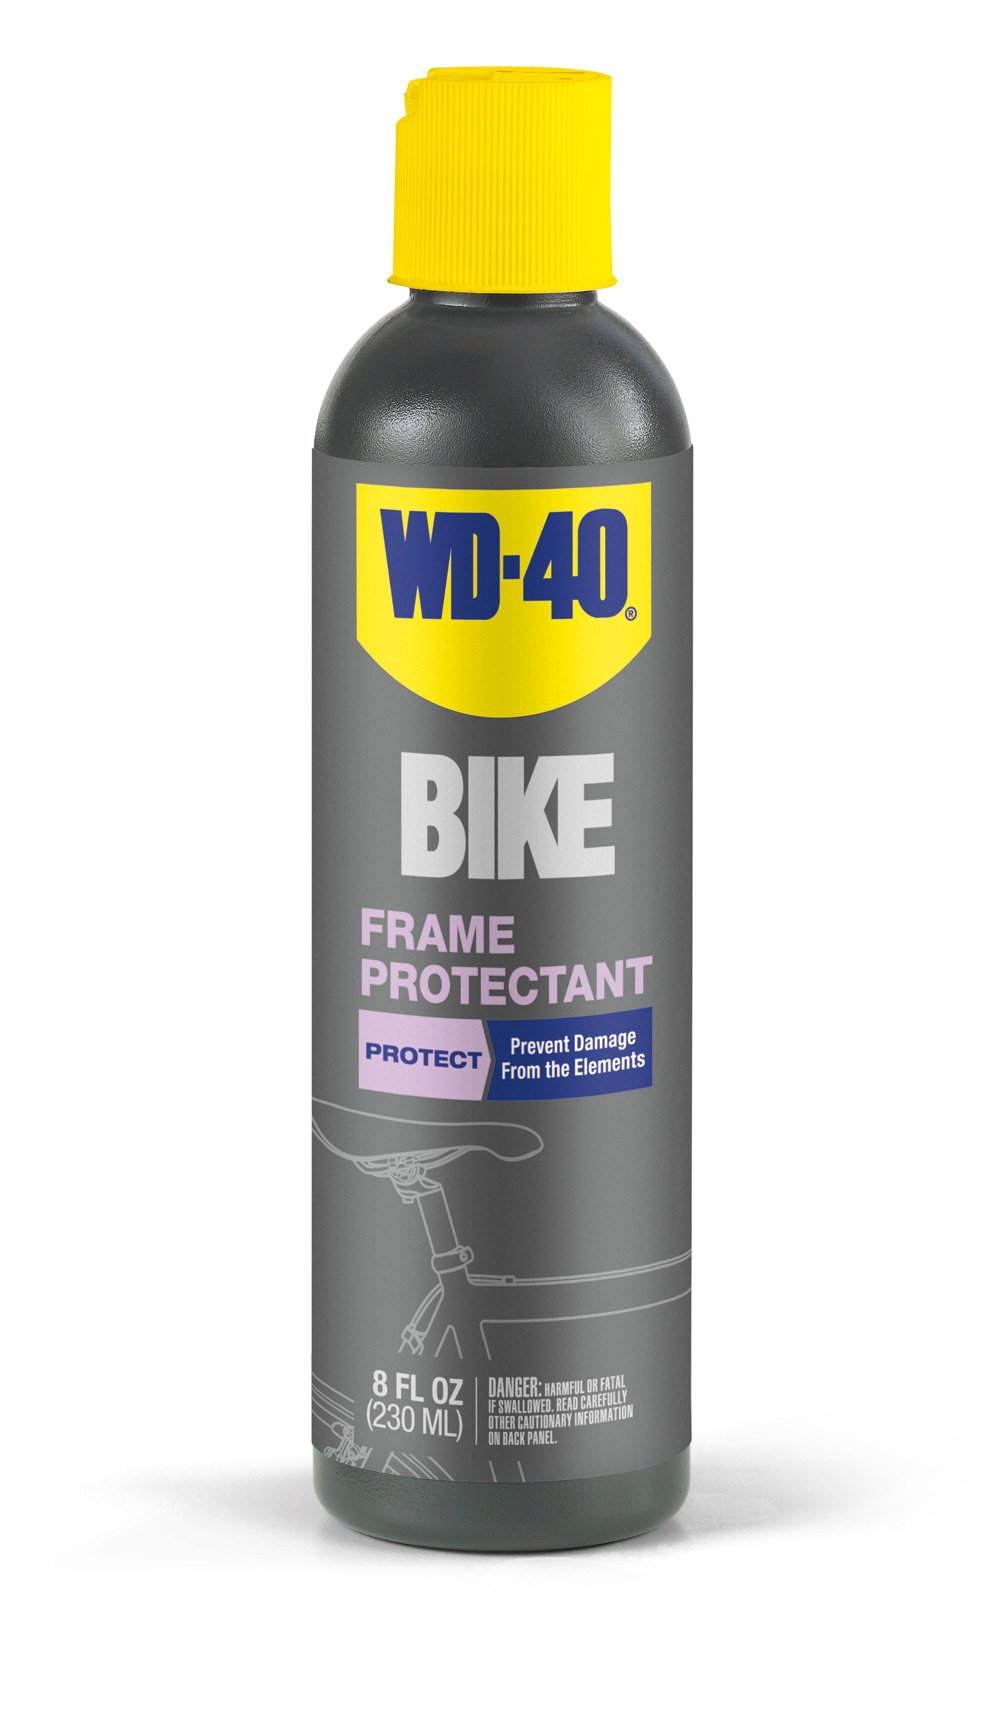 wd 40 bike frame protectant